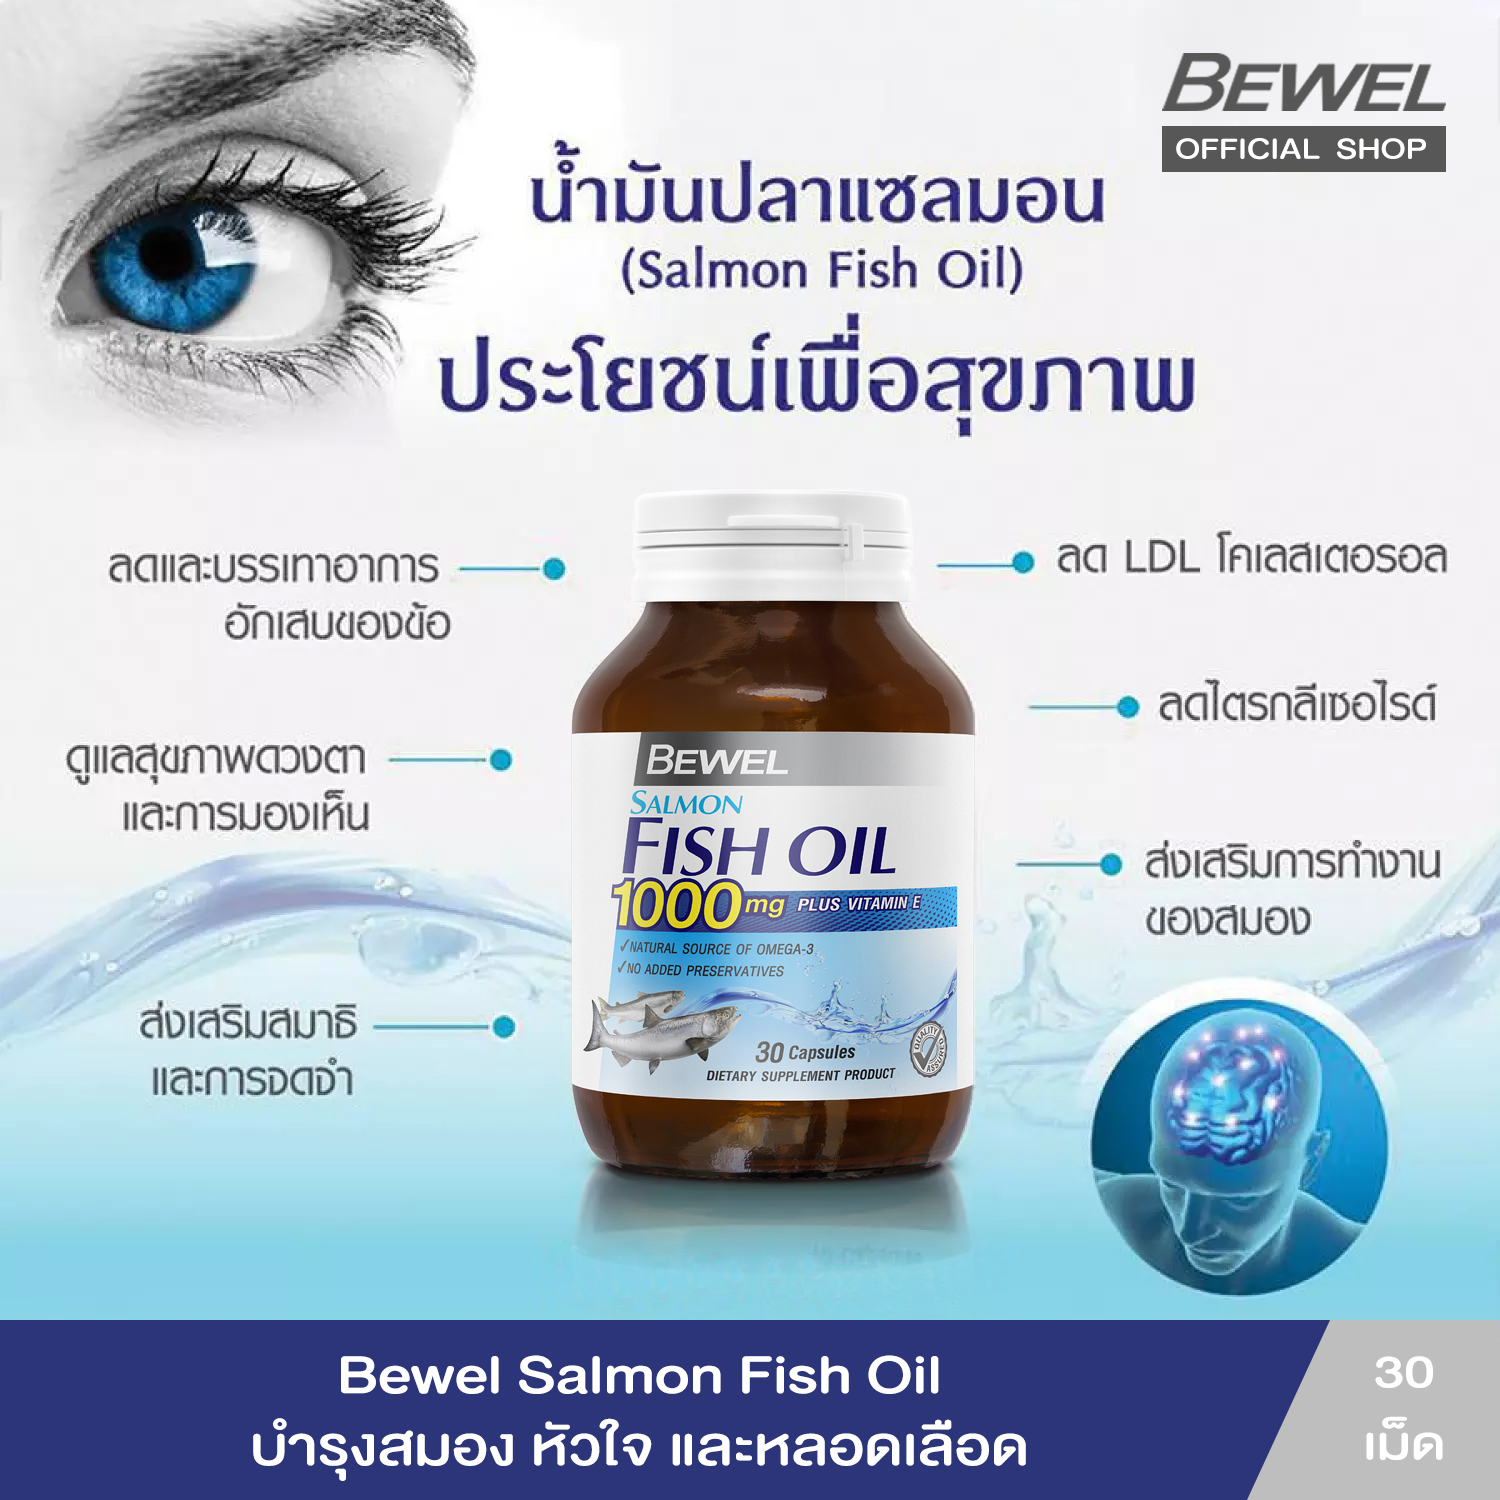 Bewel Salmon Fish Oil - บีเวลน้ำมันปลาแซลมอน ผสมวิตามินอี มีโอเมก้า 3 บำรุงสมอง (30 Capsule)